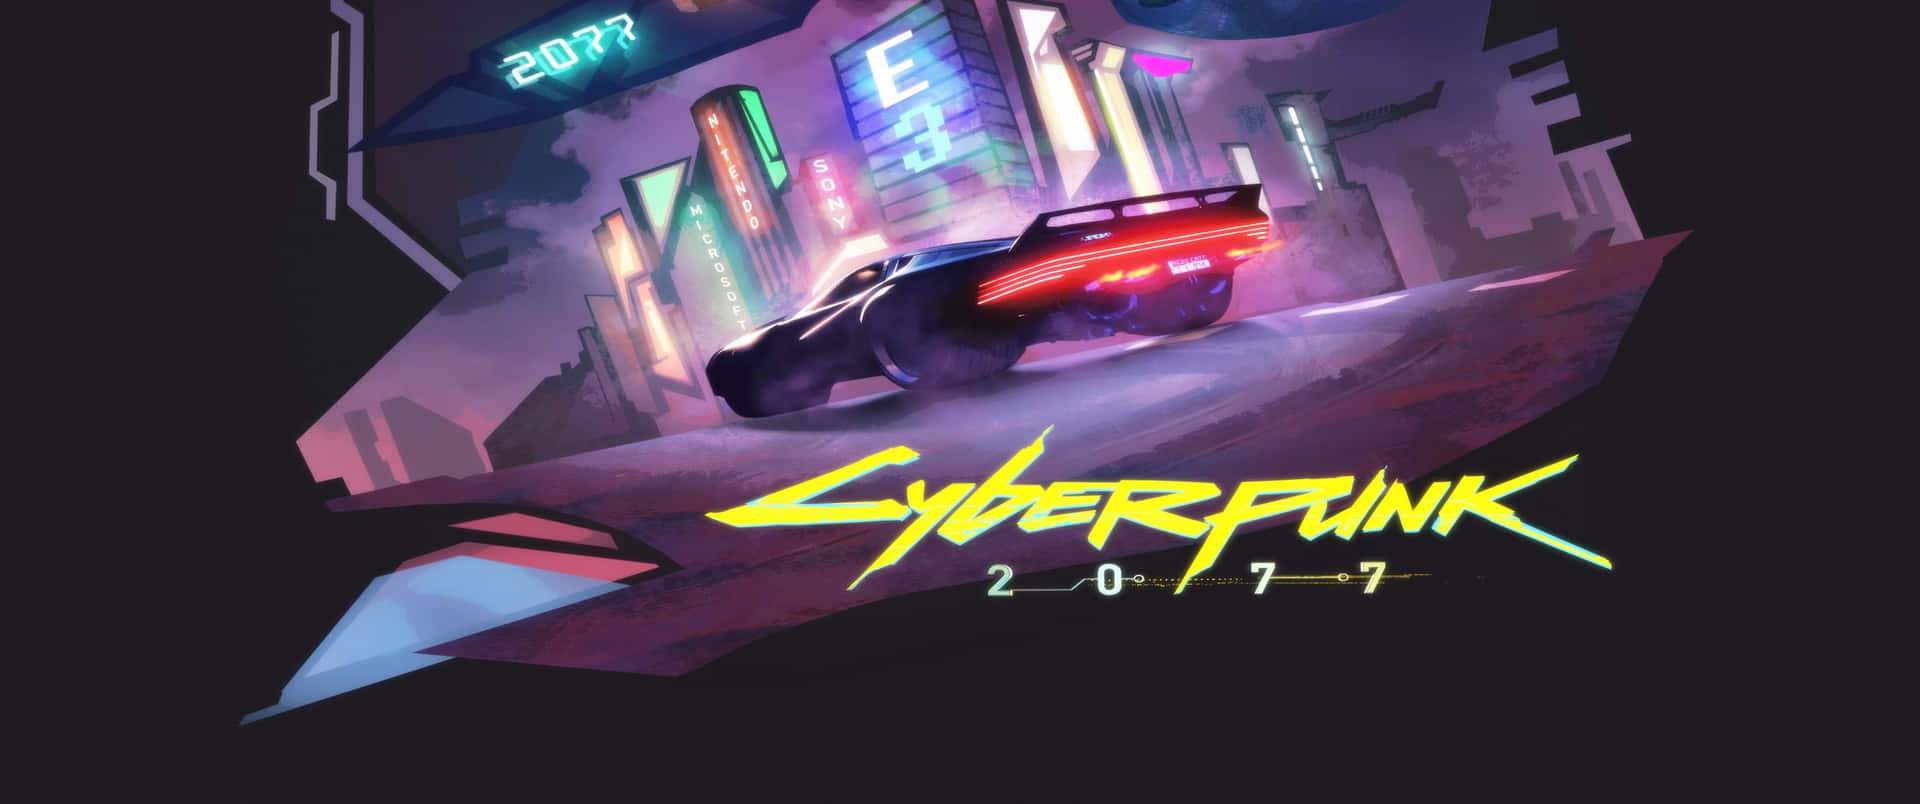 3440x1440p Cyberpunk 2077 Background Car In The Street Fanart